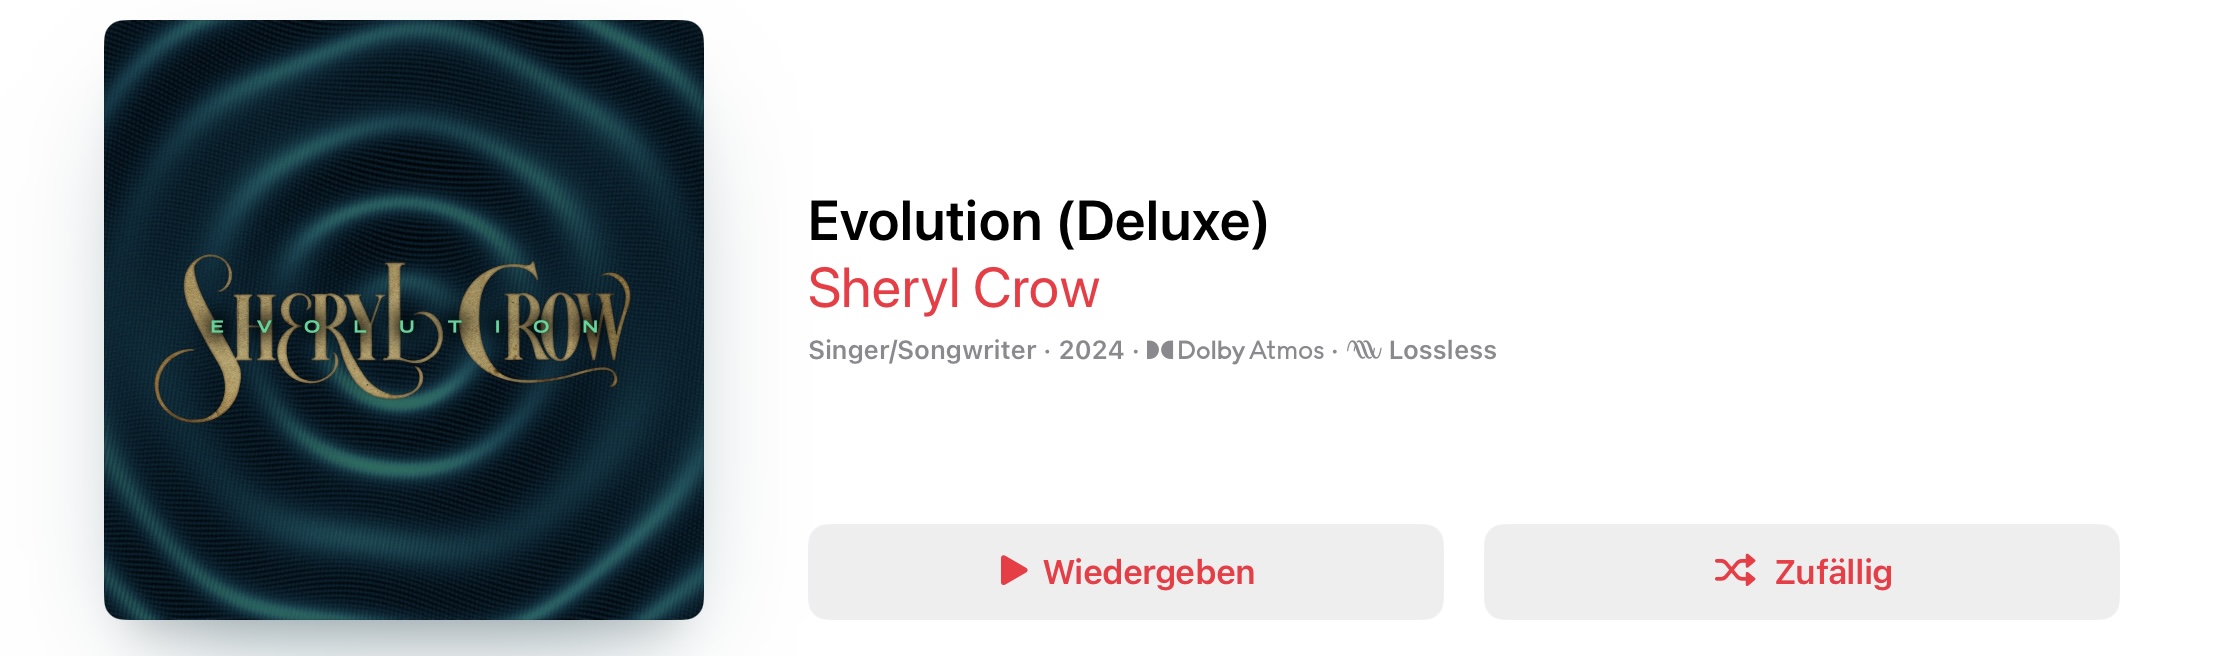 Sheryl Crow Evolution Dolby Atmos